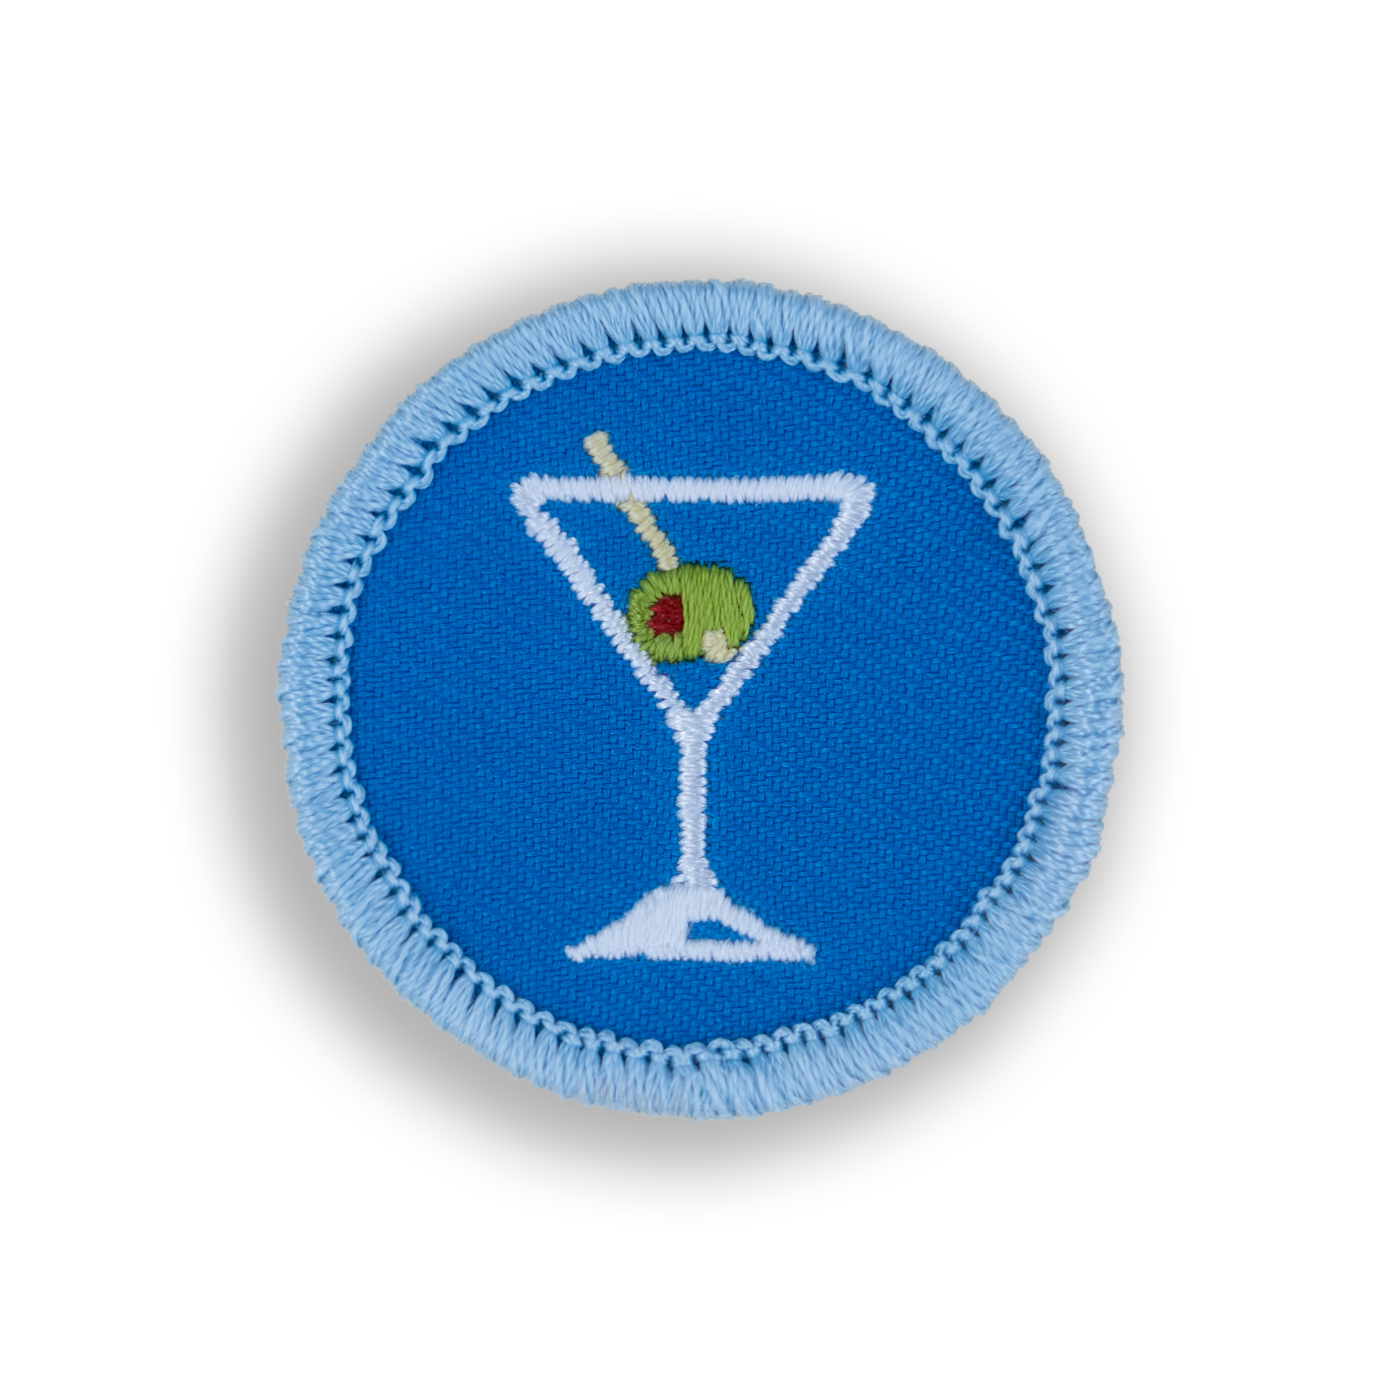 Martini Patch | Demerit Wear - Fake Merit Badges